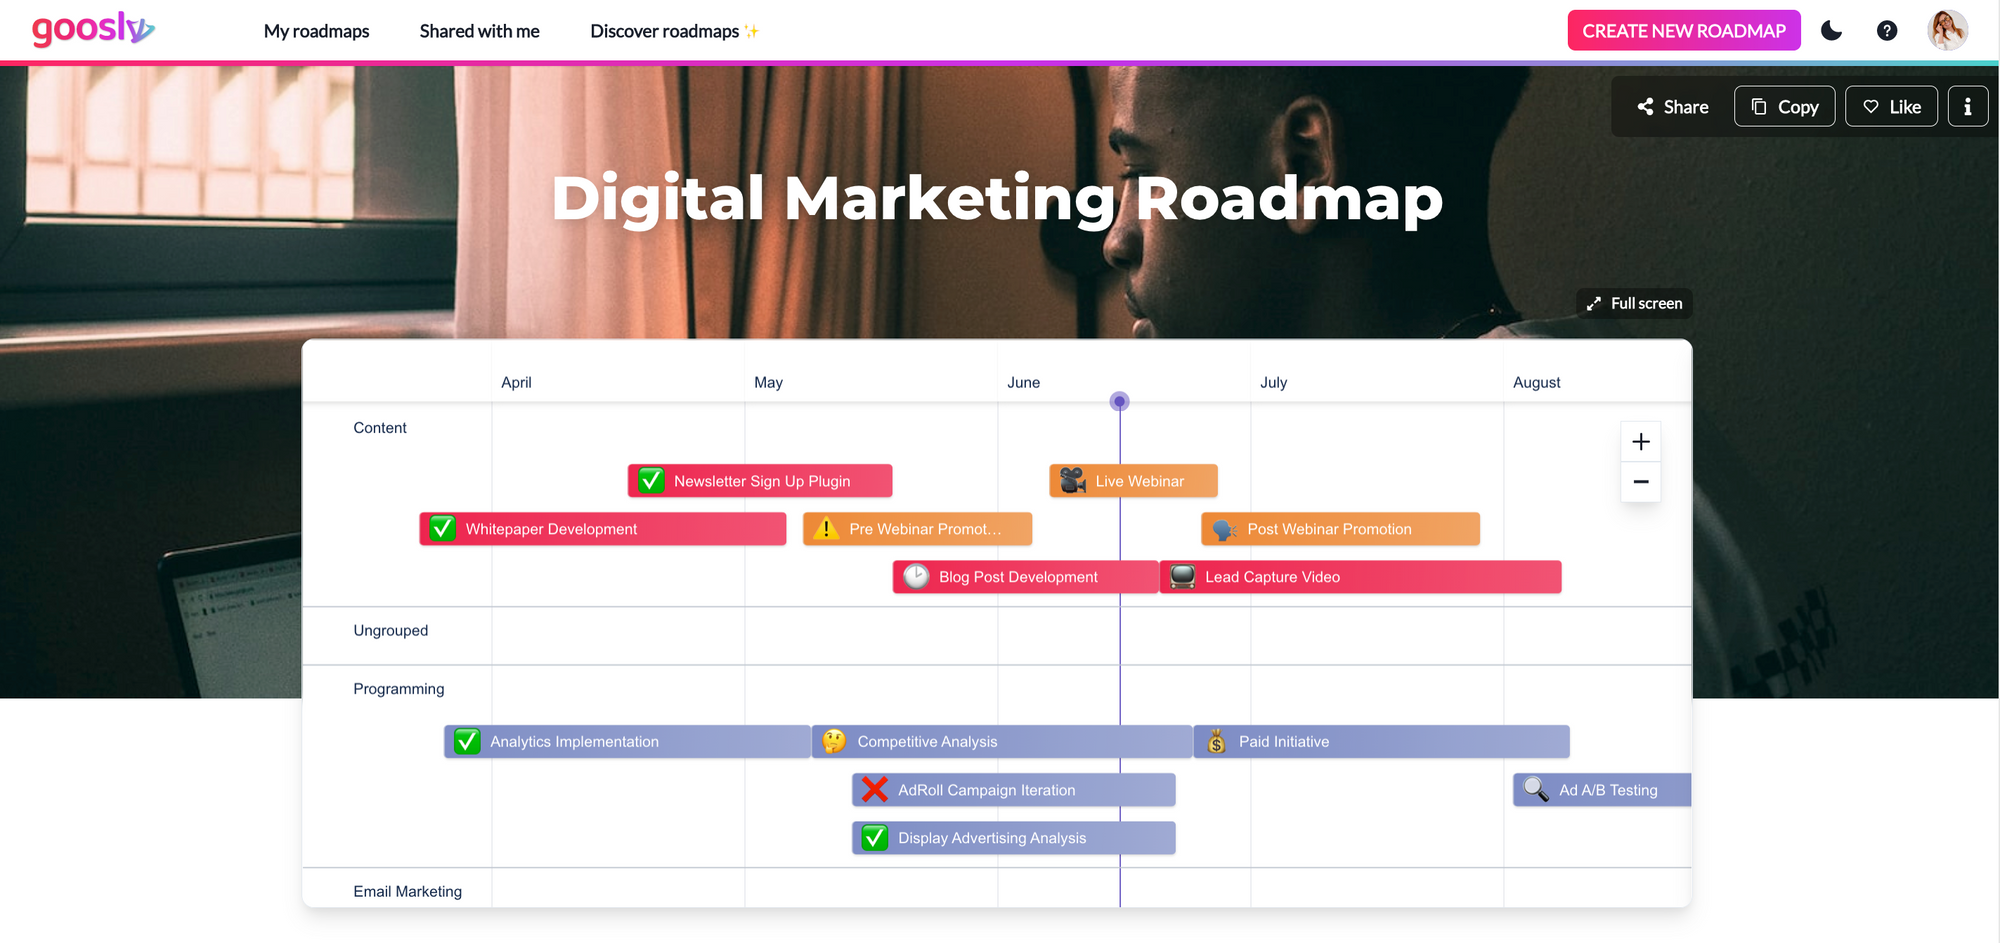 Goosly Digital Marketing Roadmap Template